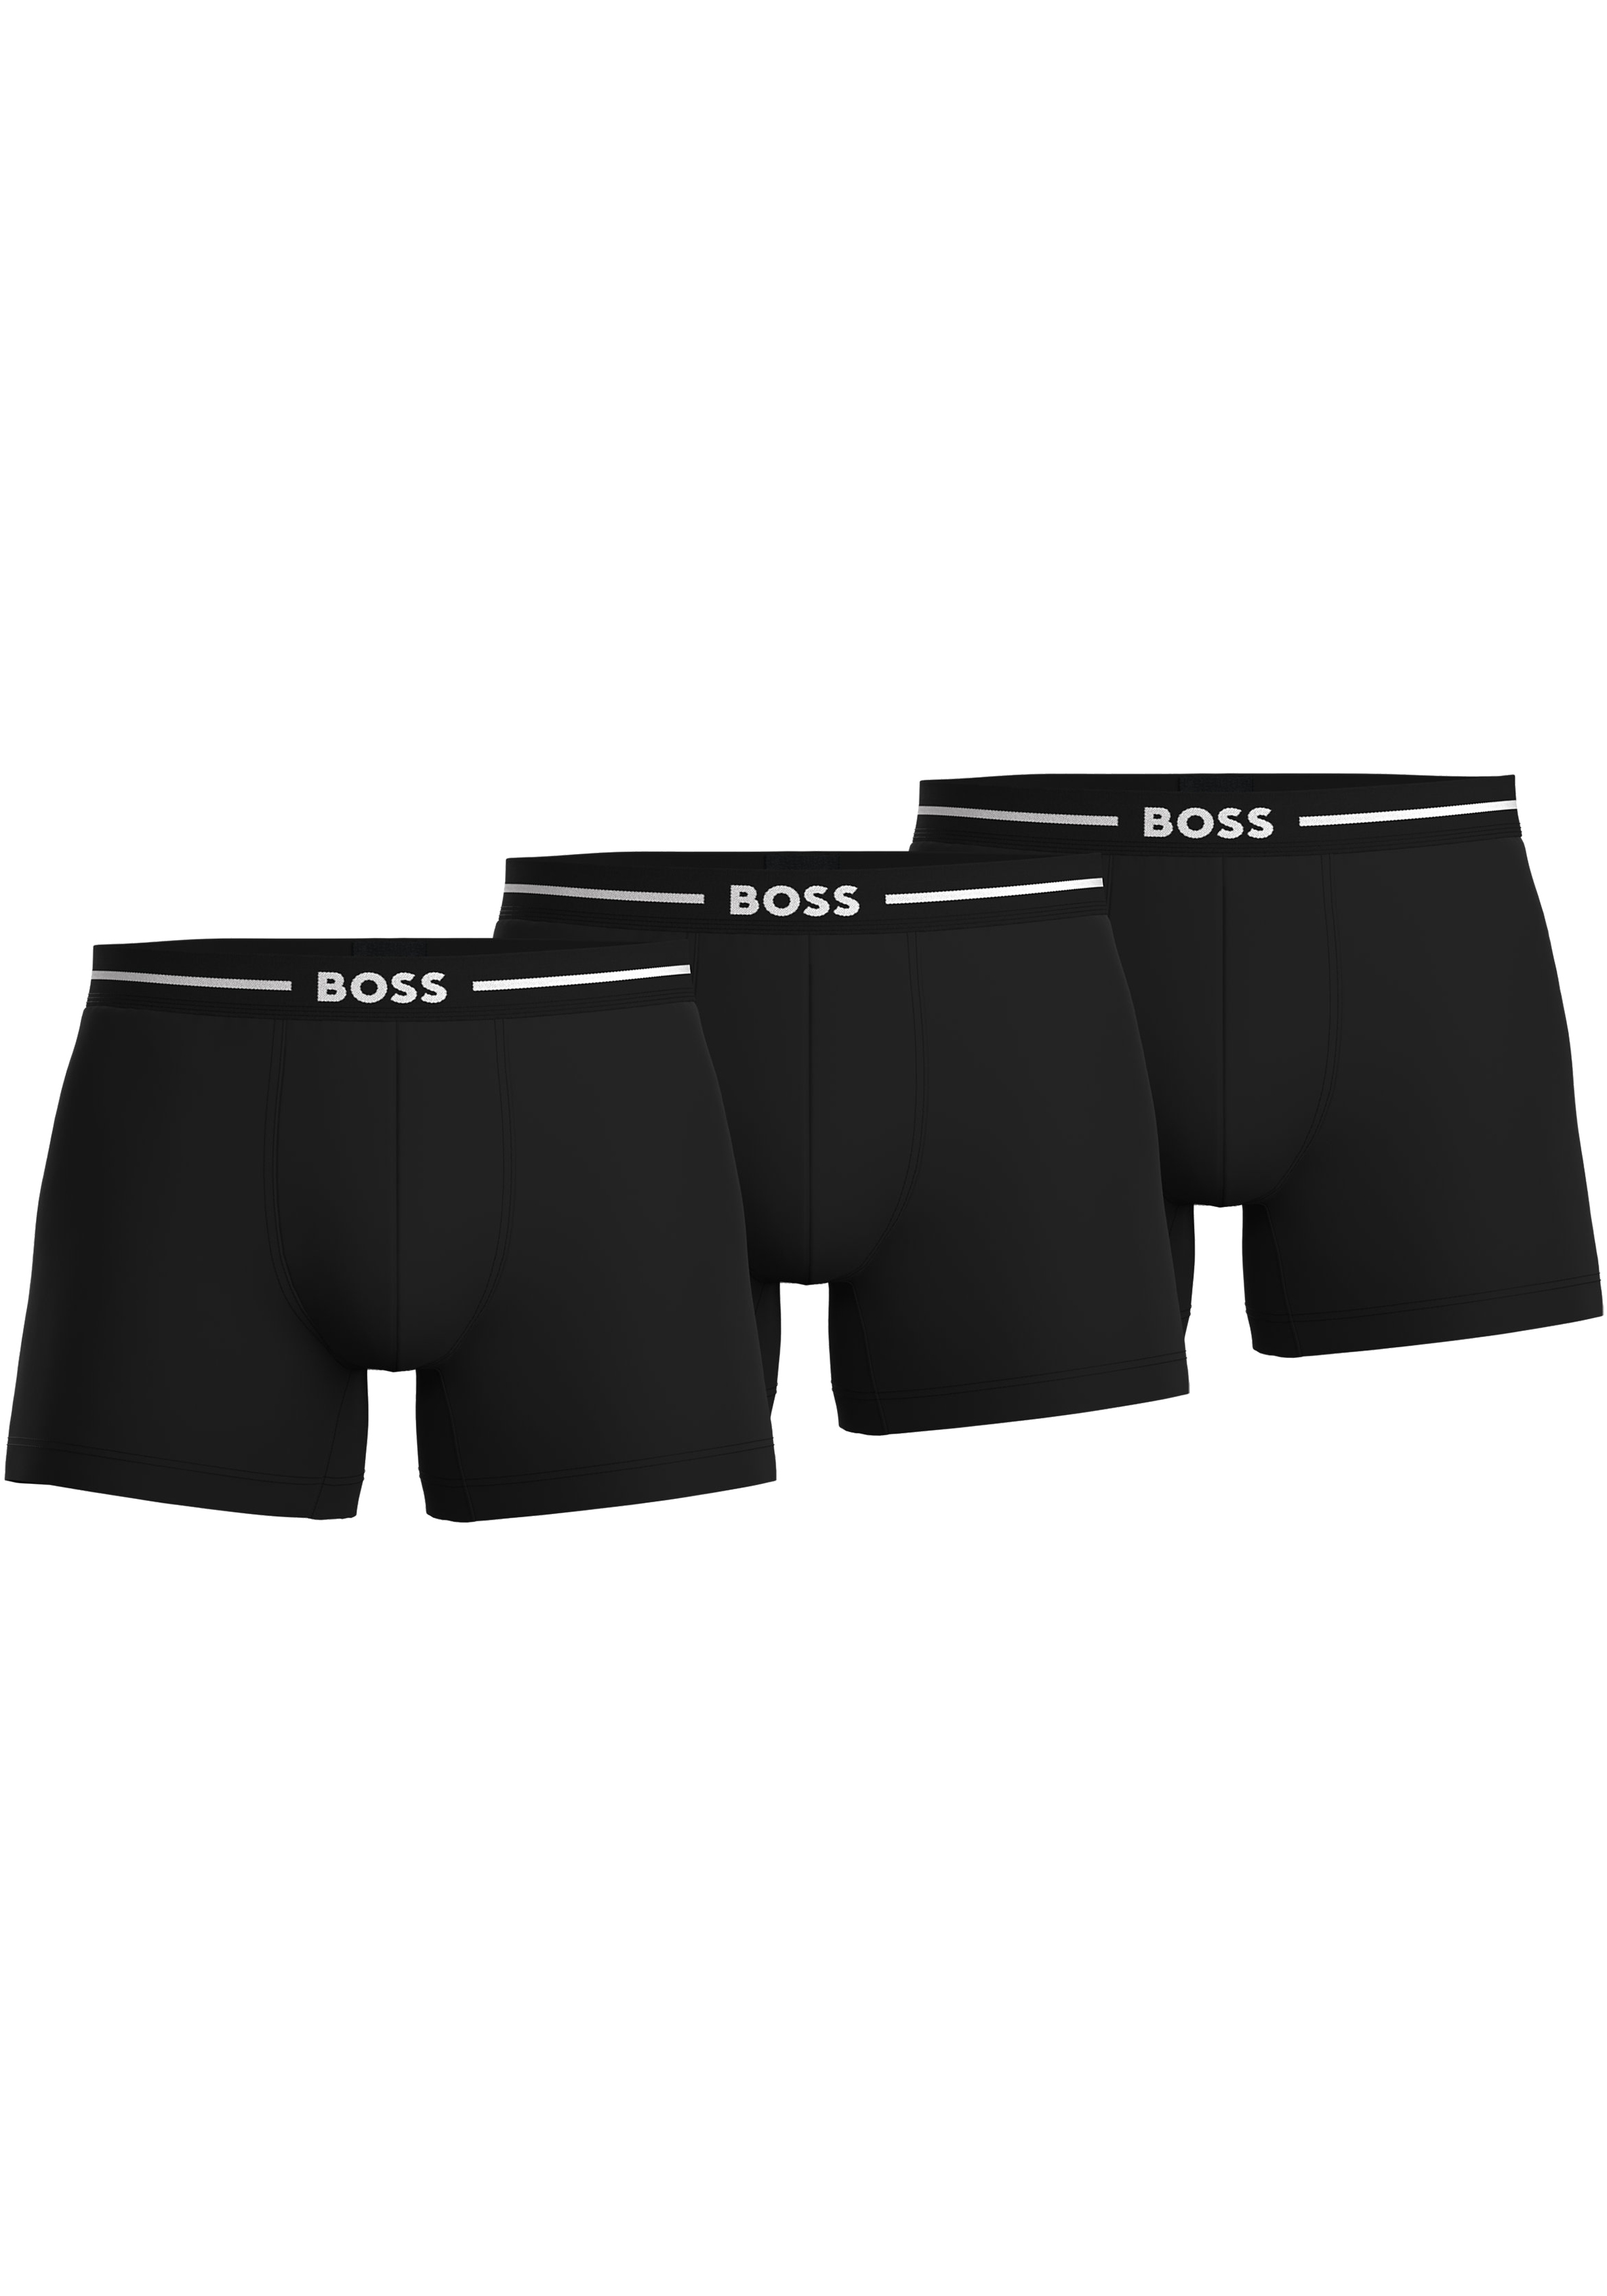 HUGO BOSS Bold boxer briefs (3-pack), heren boxers normale lengte, zwart